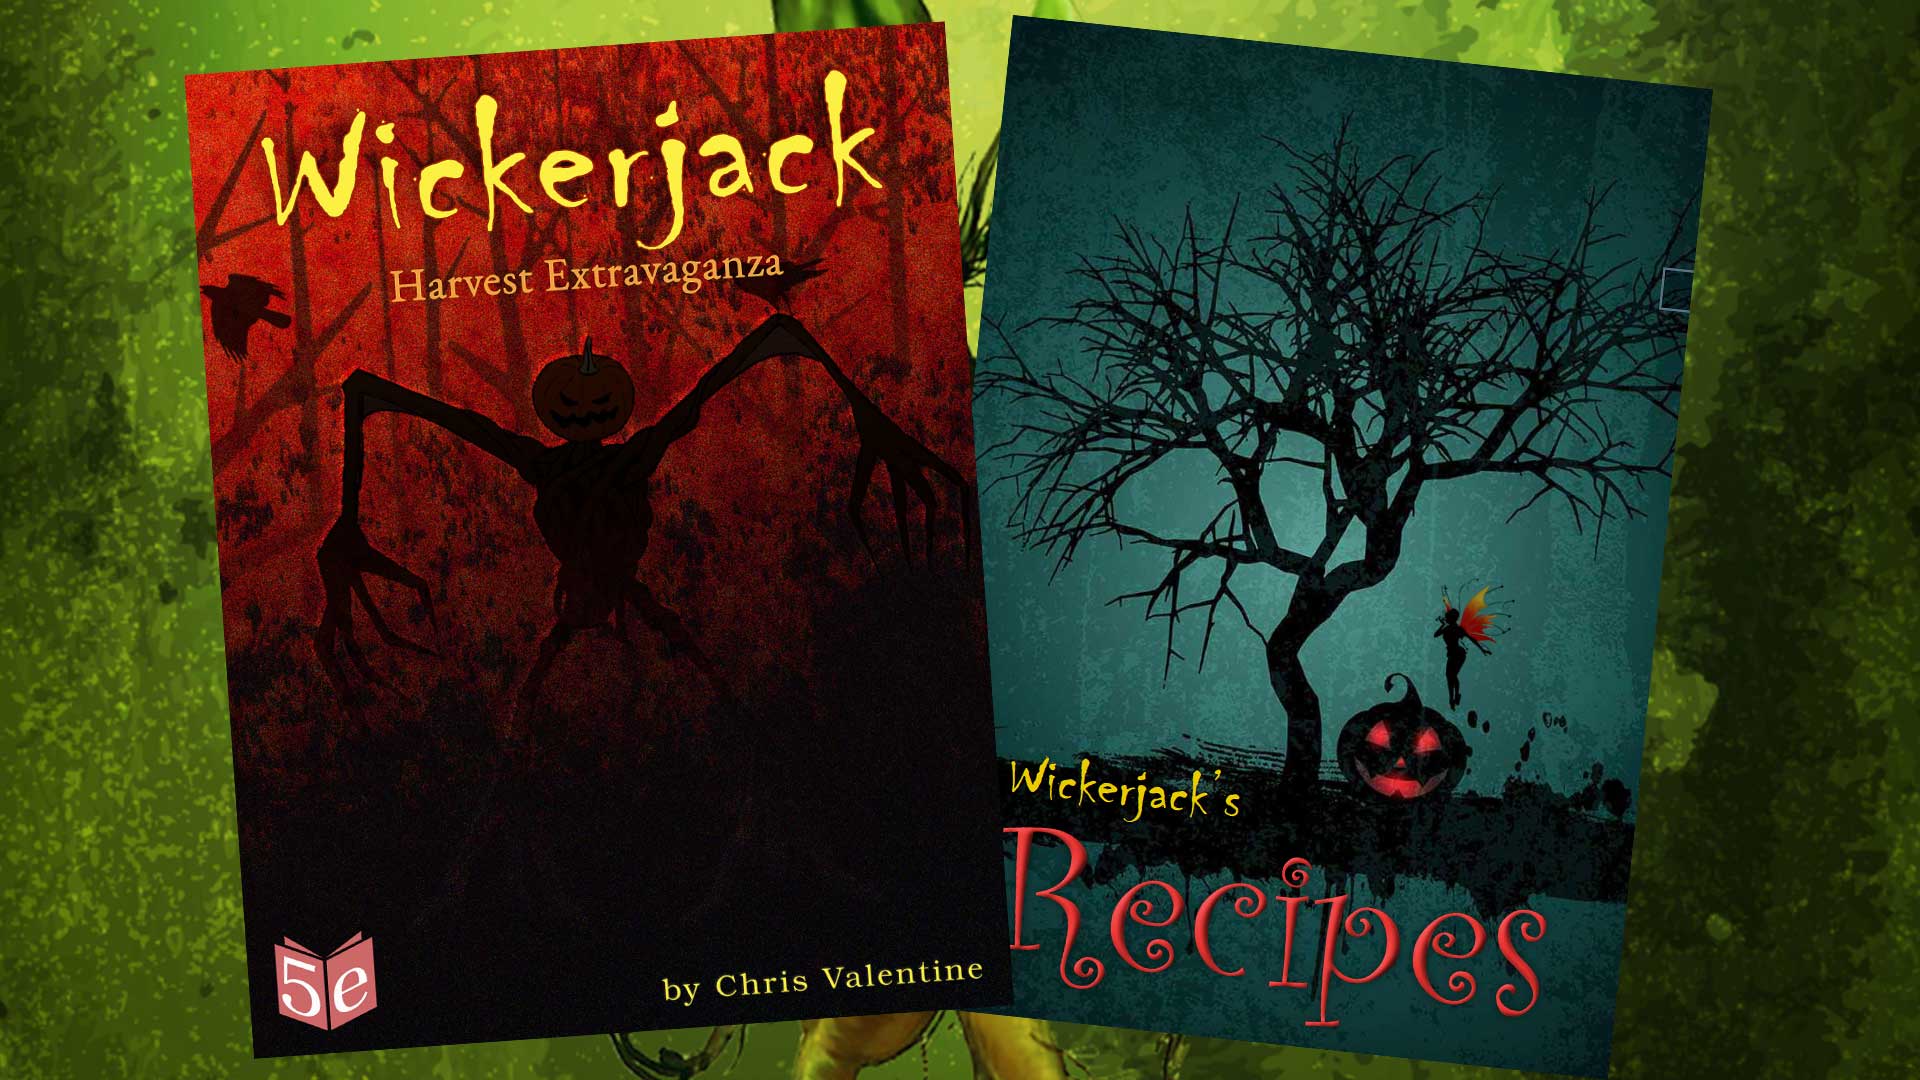 Wickerjack and Wickerjack recipes covers